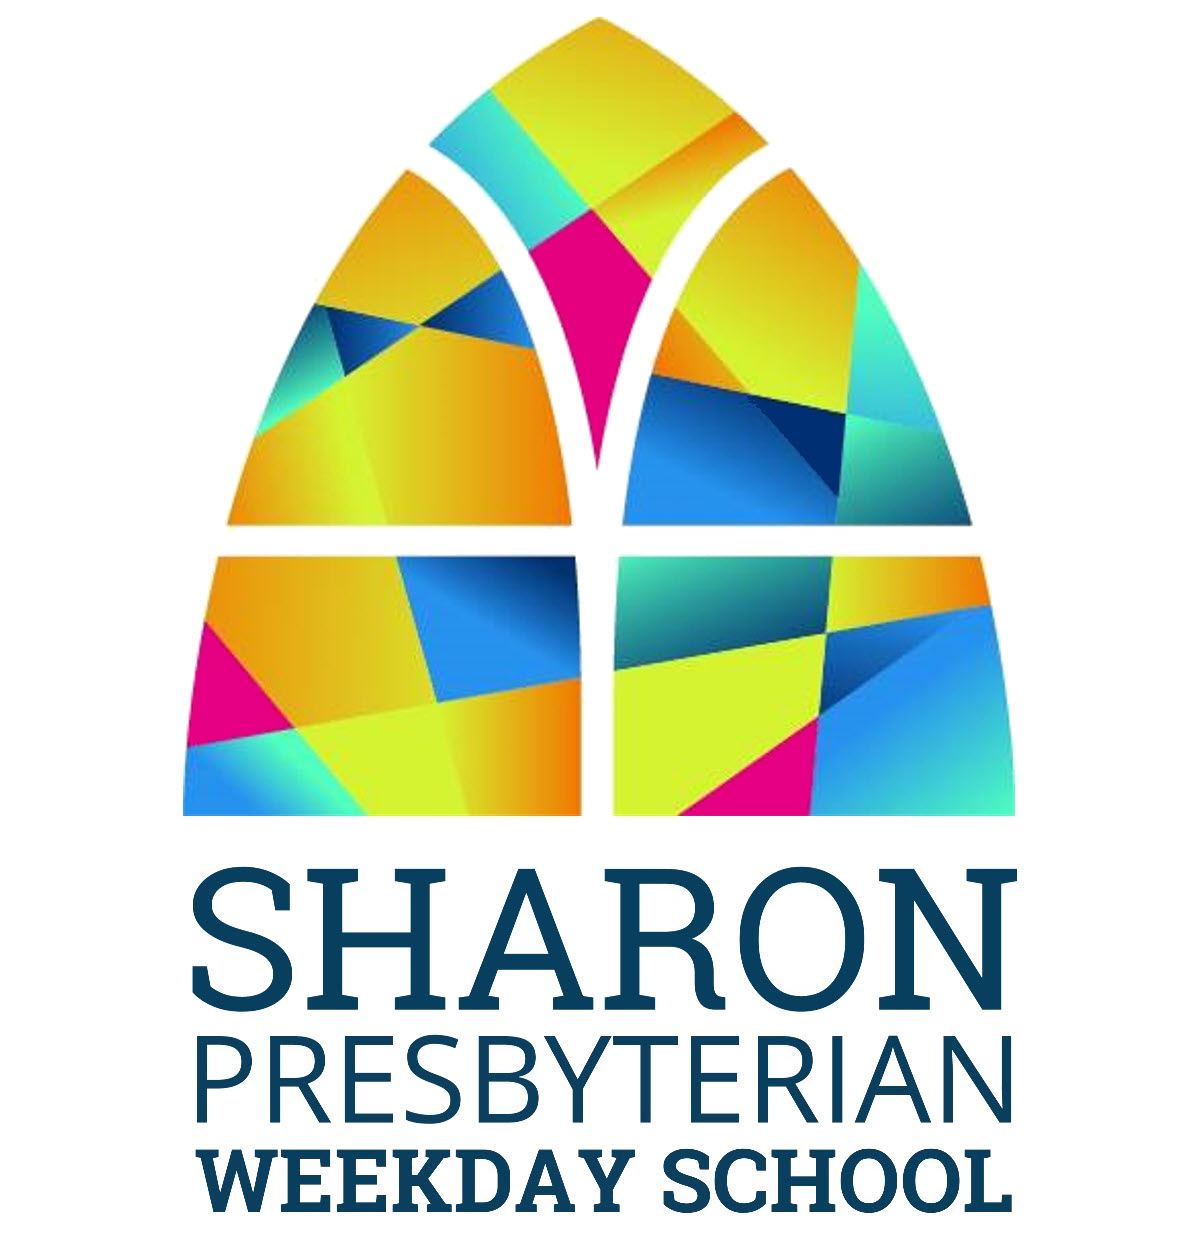 Sharon Presbyterian Weekday School